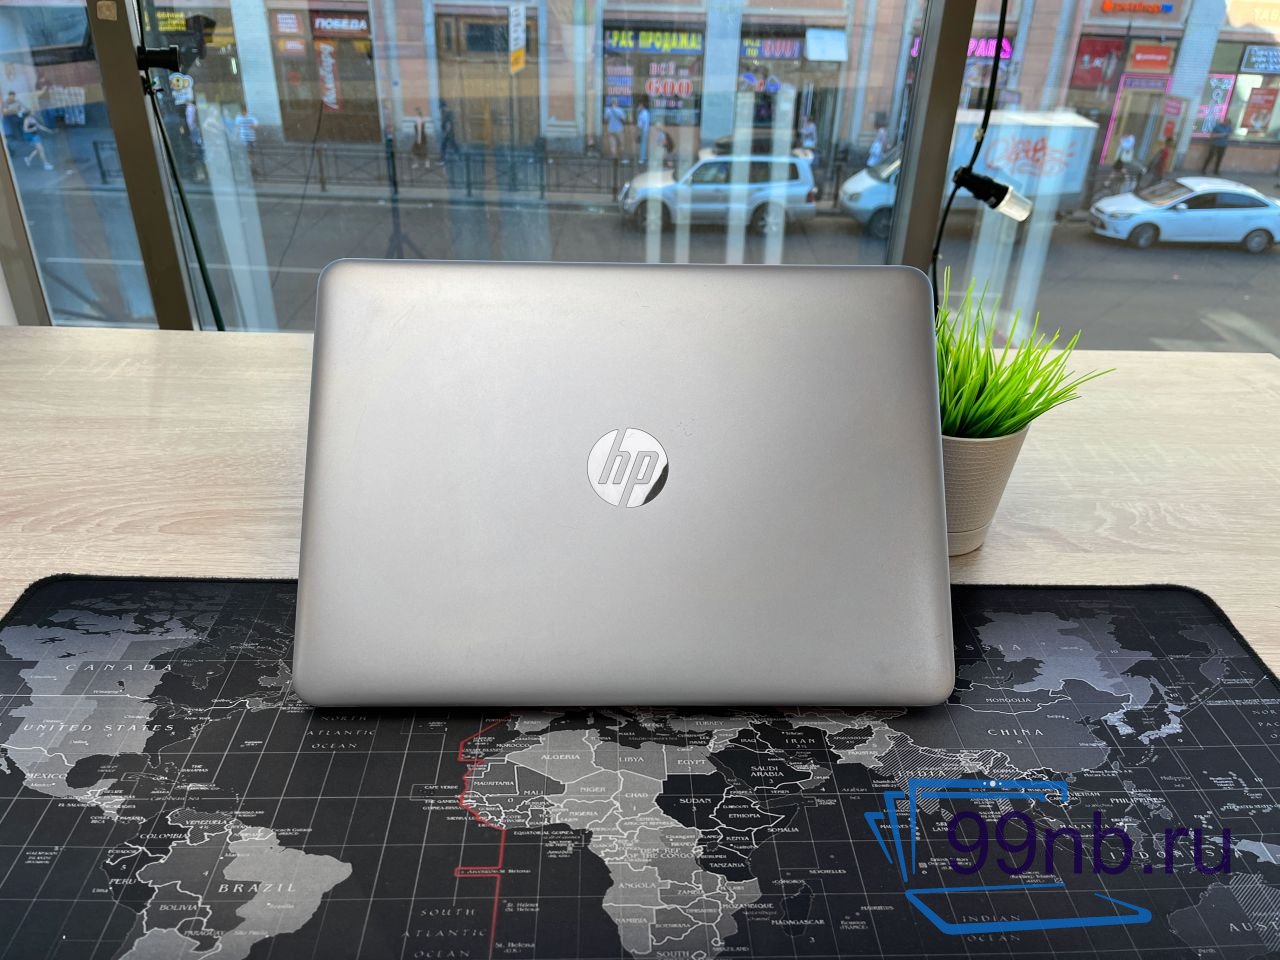  Мощный HP Probook в металле i5+IPS+SSD